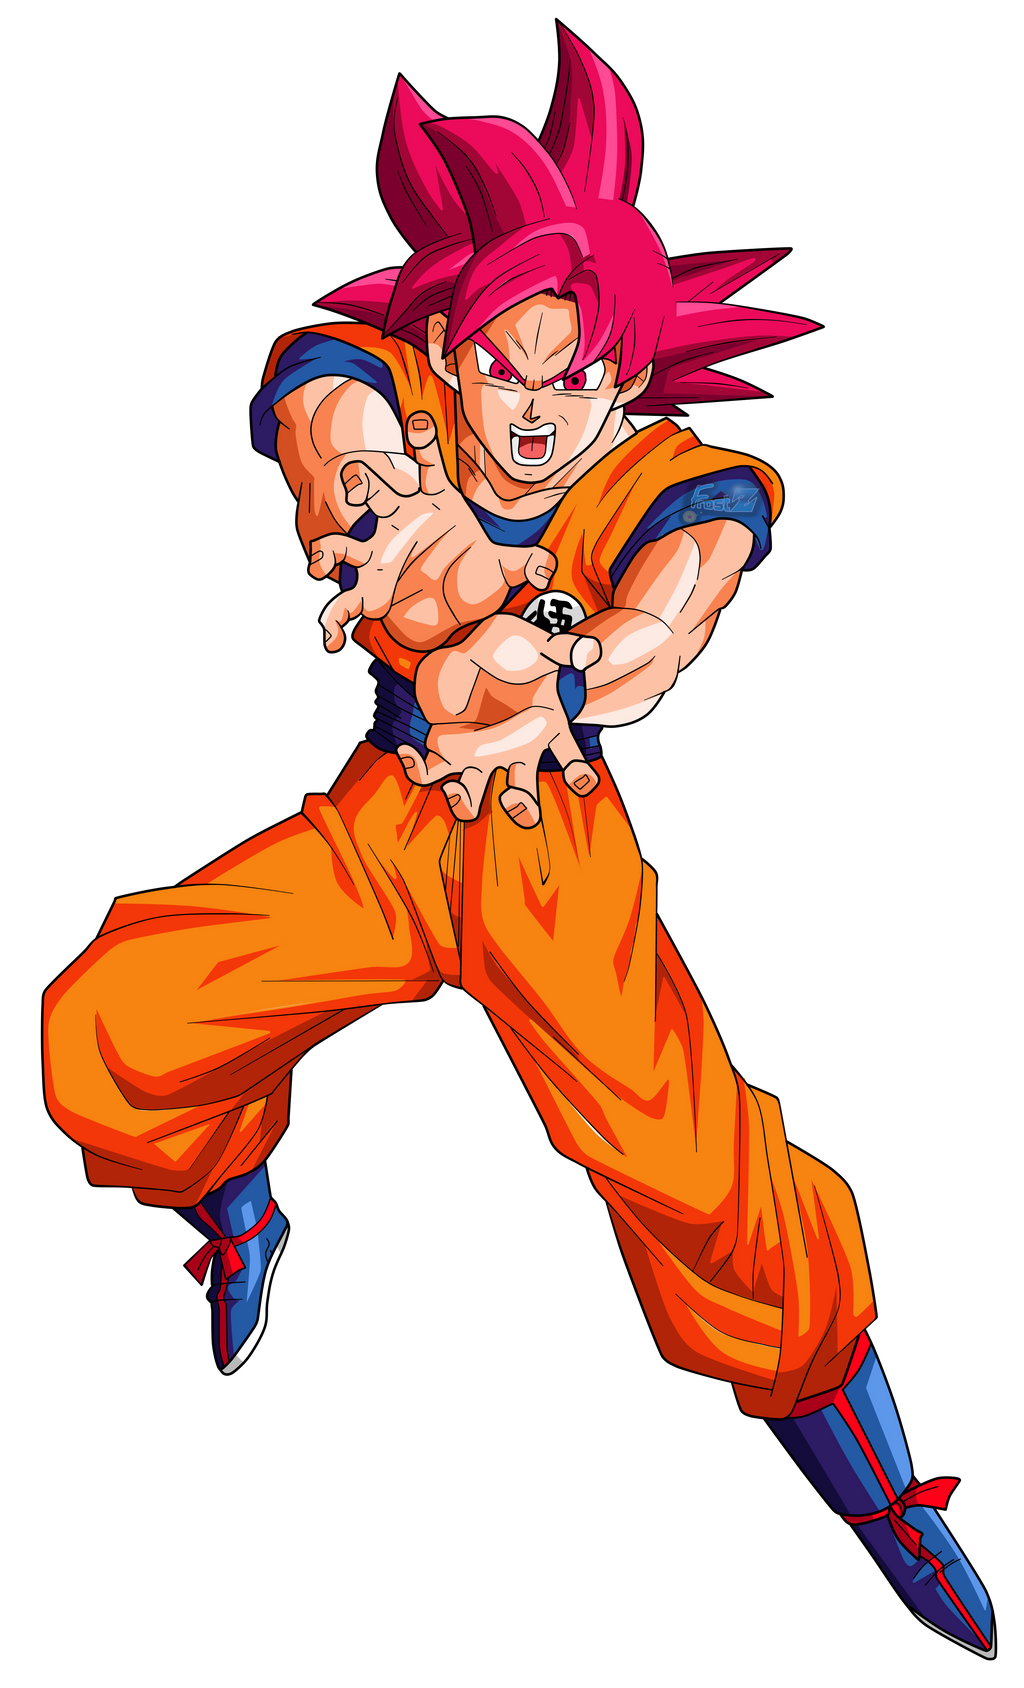 Goku Super Saiyan God by ChronoFz on DeviantArt